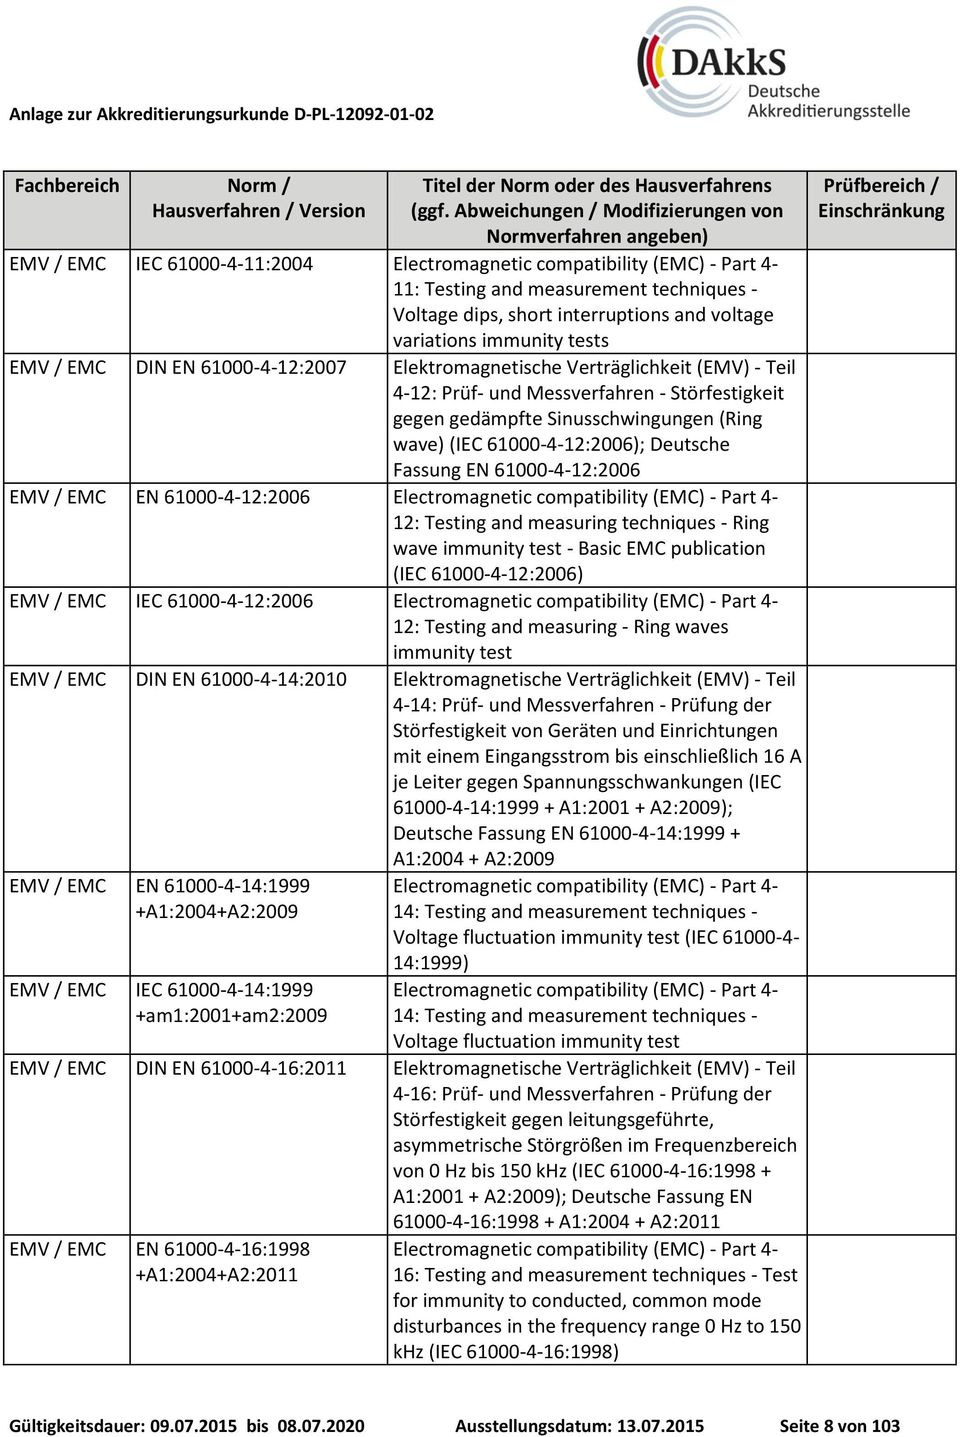 Fassung EN 61000-4-12:2006 EMV / EMC EN 61000-4-12:2006 Electromagnetic compatibility (EMC) - Part 4-12: Testing and measuring techniques - Ring wave immunity test - Basic EMC publication (IEC